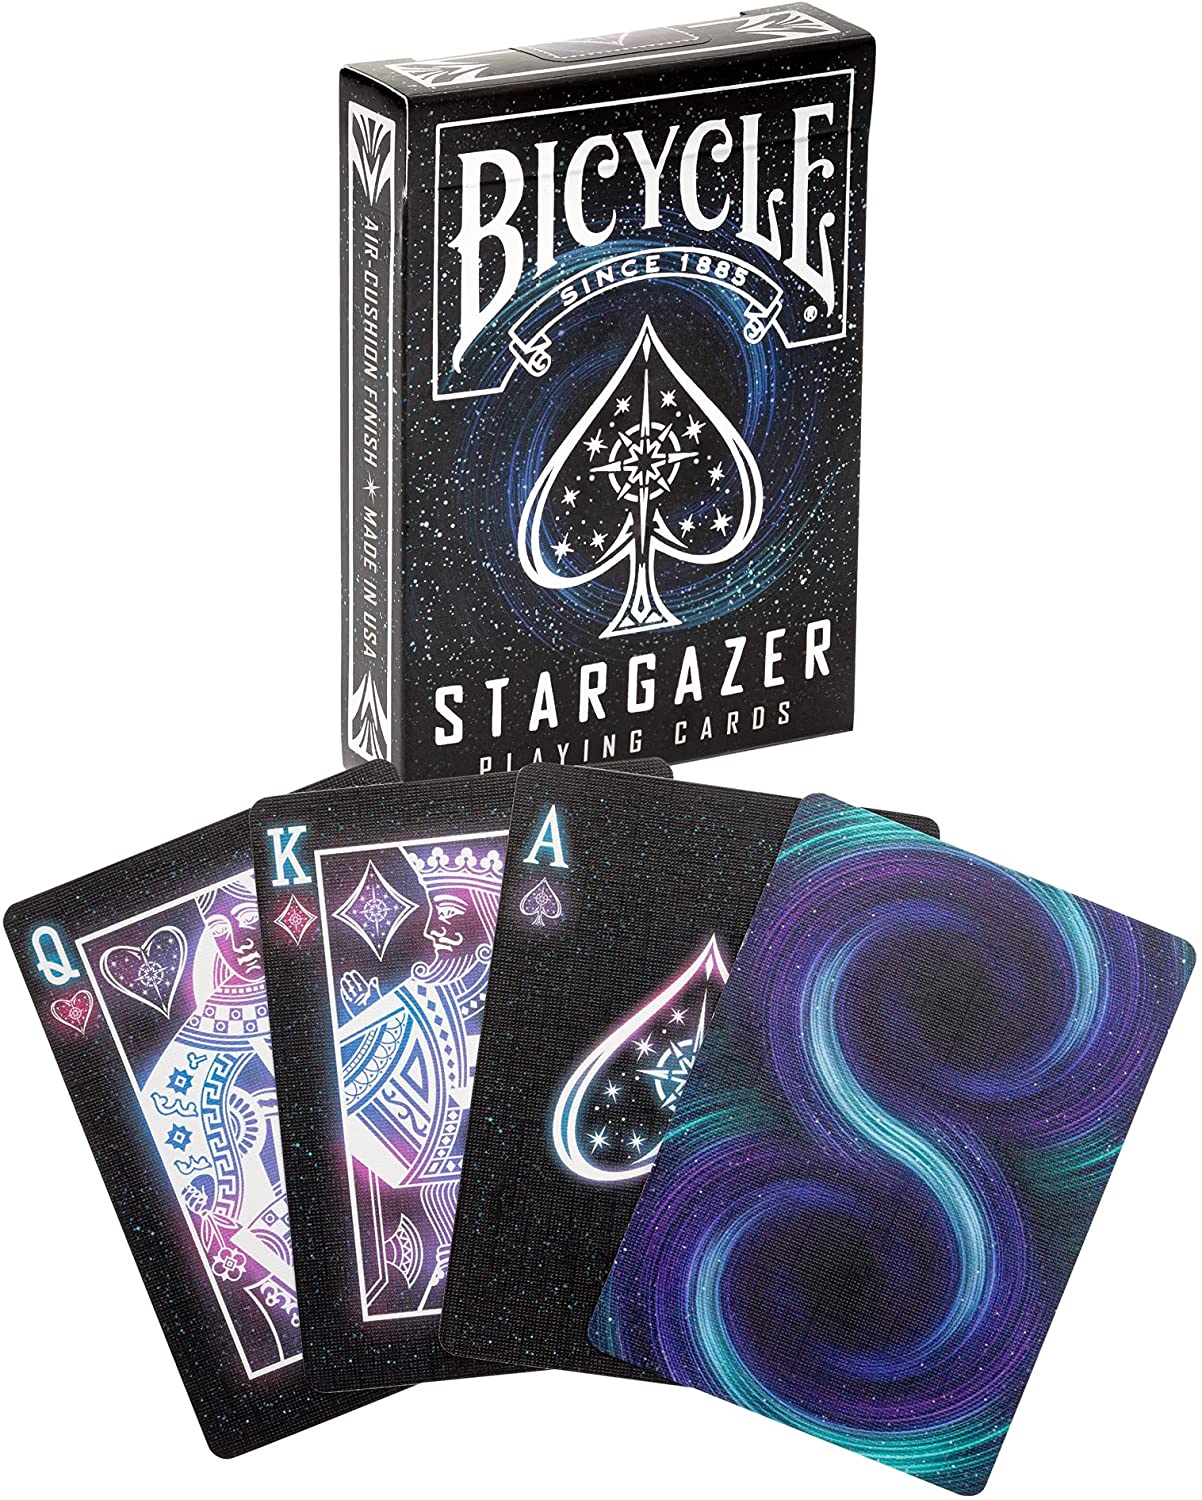 Bicycle Cards- Stargazer